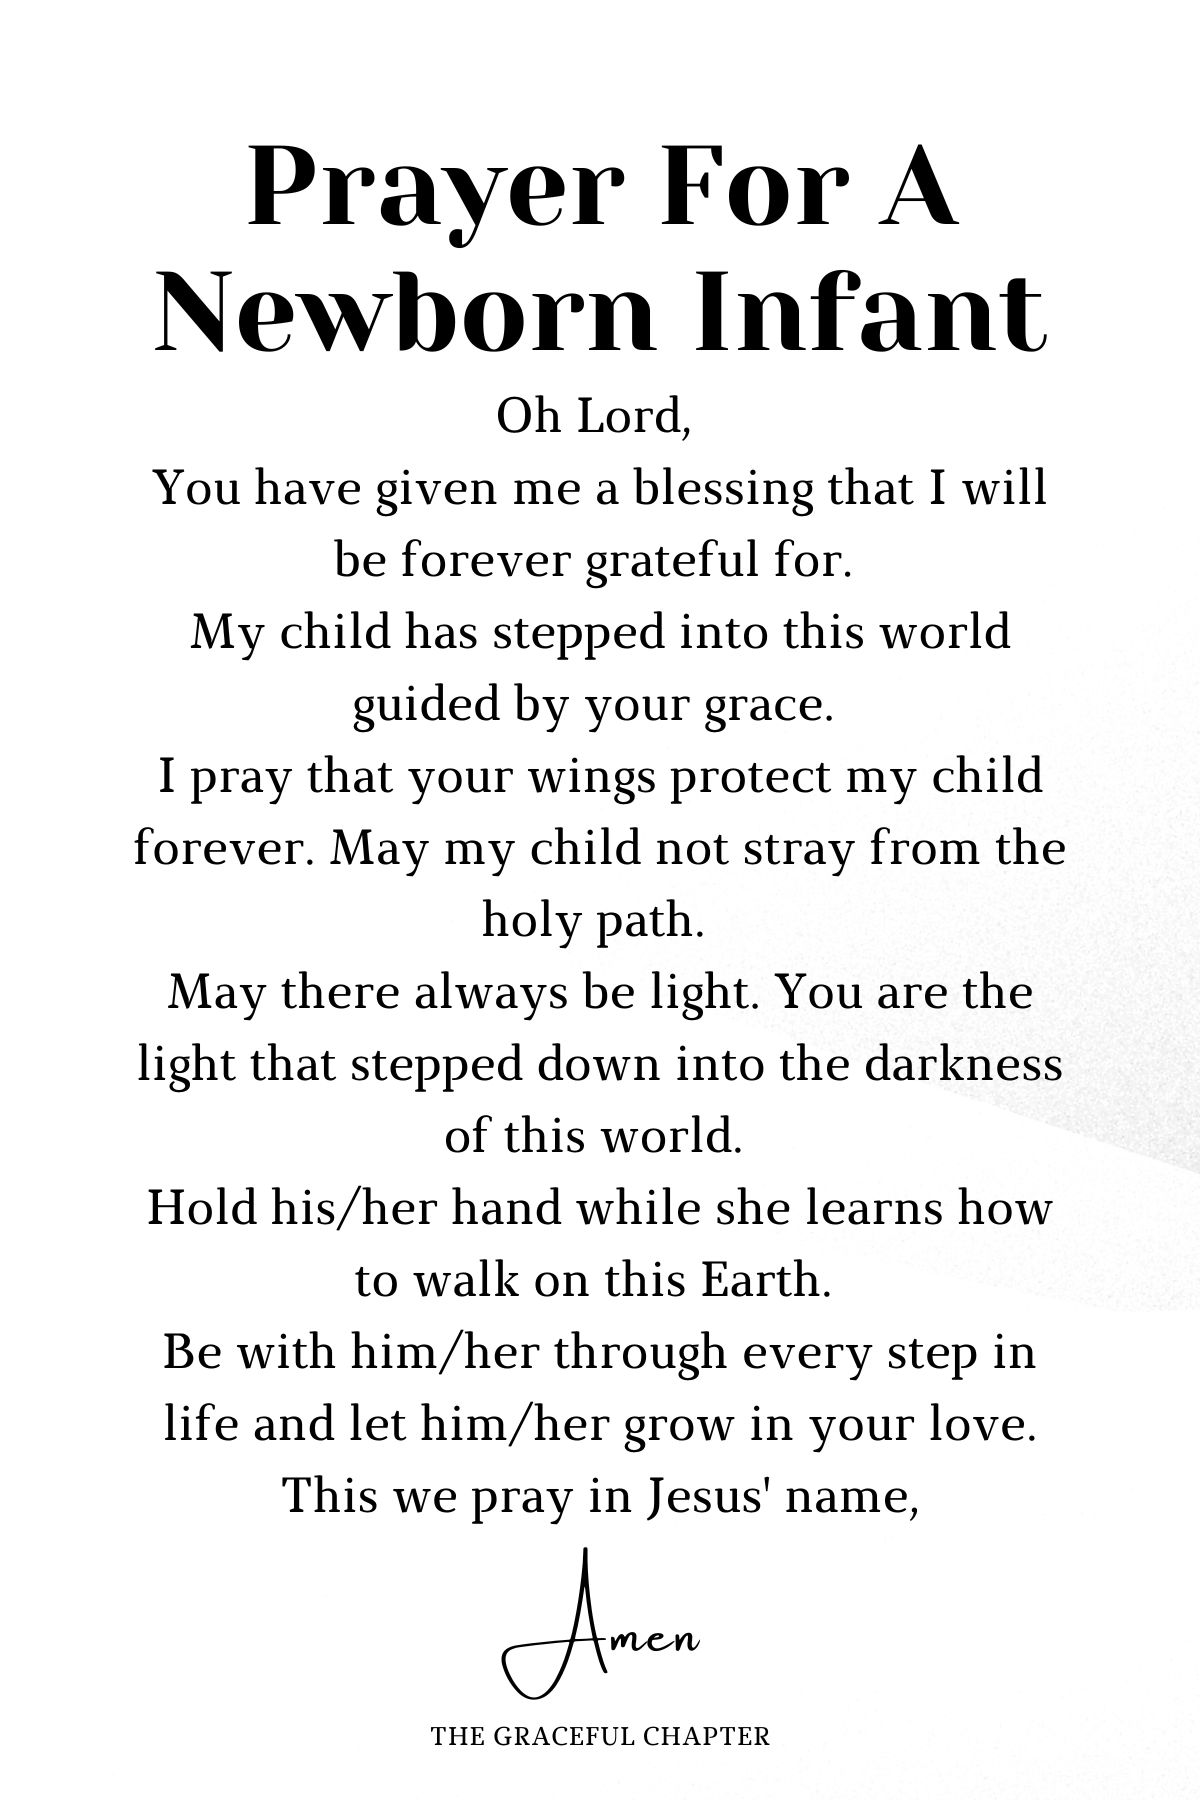 Prayer for a newborn infant